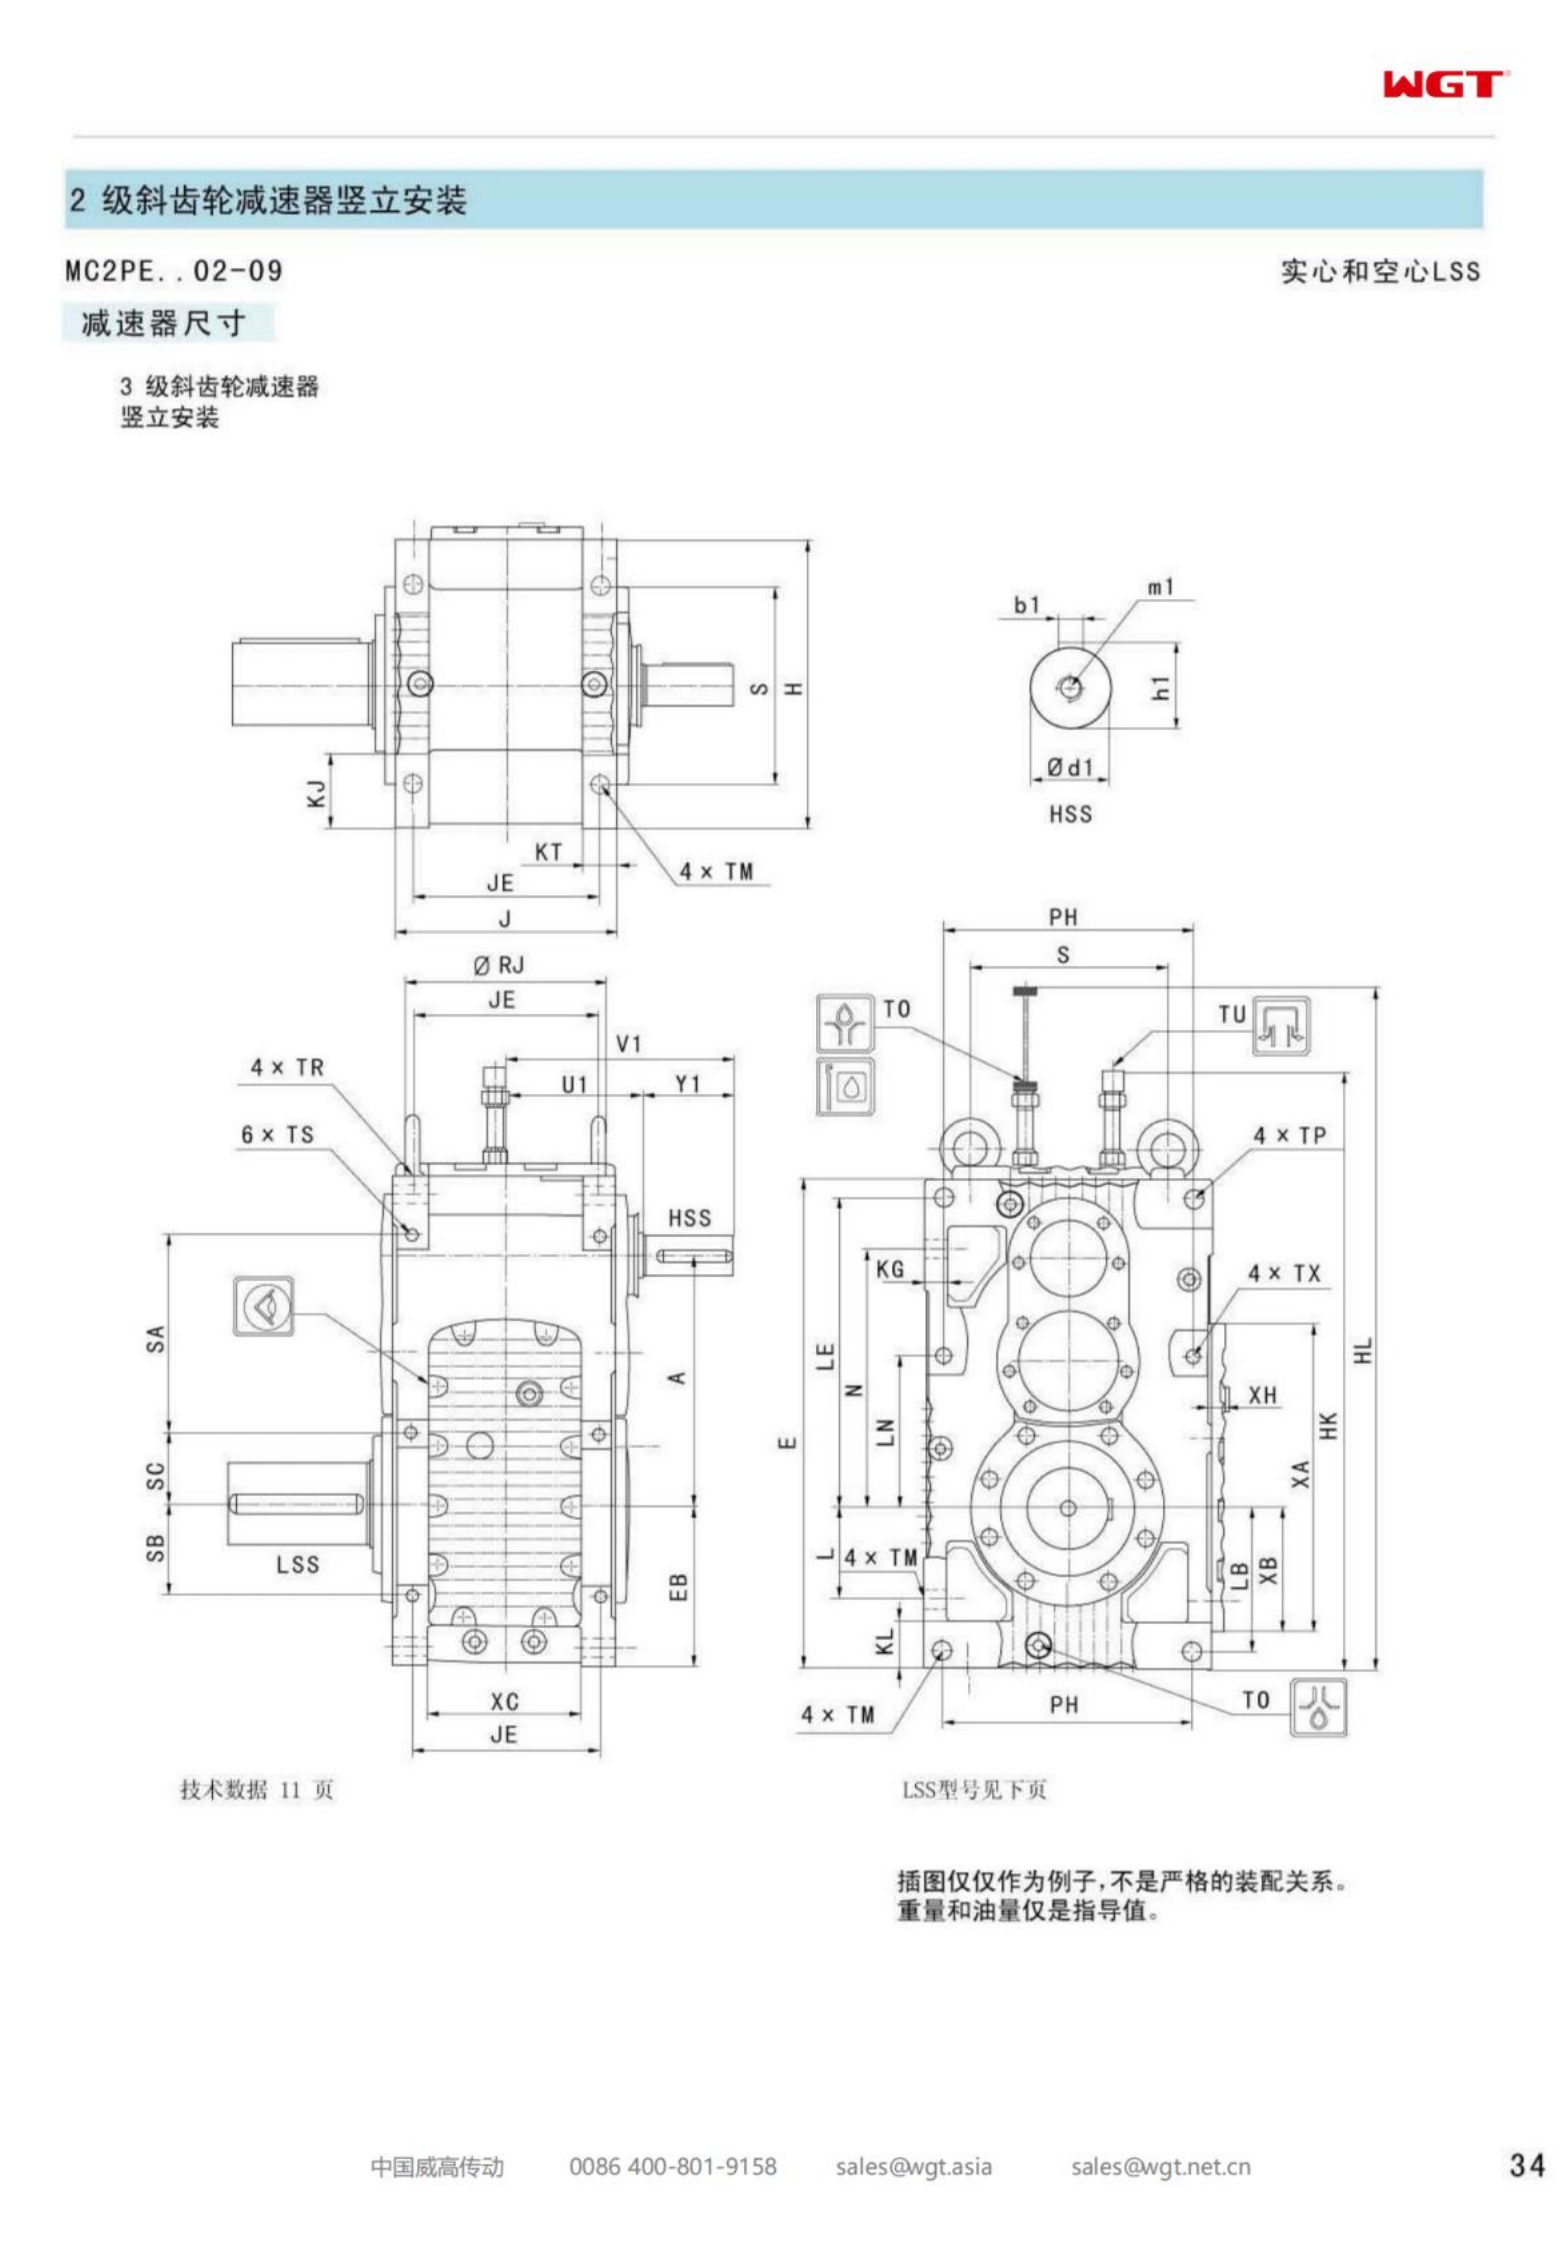 MC2PESF09 replaces _SEW_MC_Series gearbox (patent)